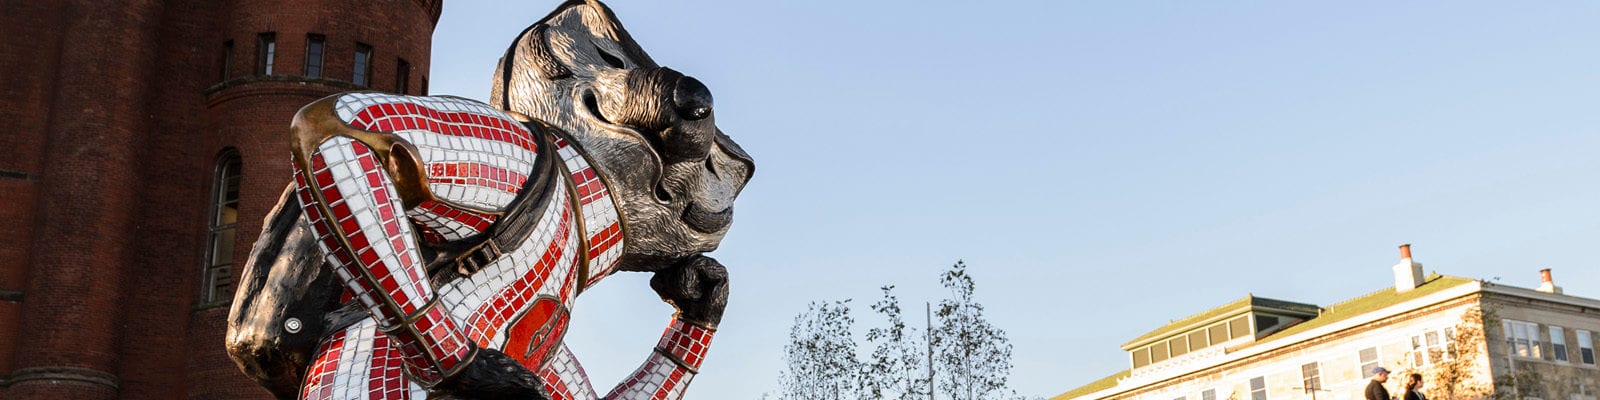 Bucky Badger statue in Alumni Park